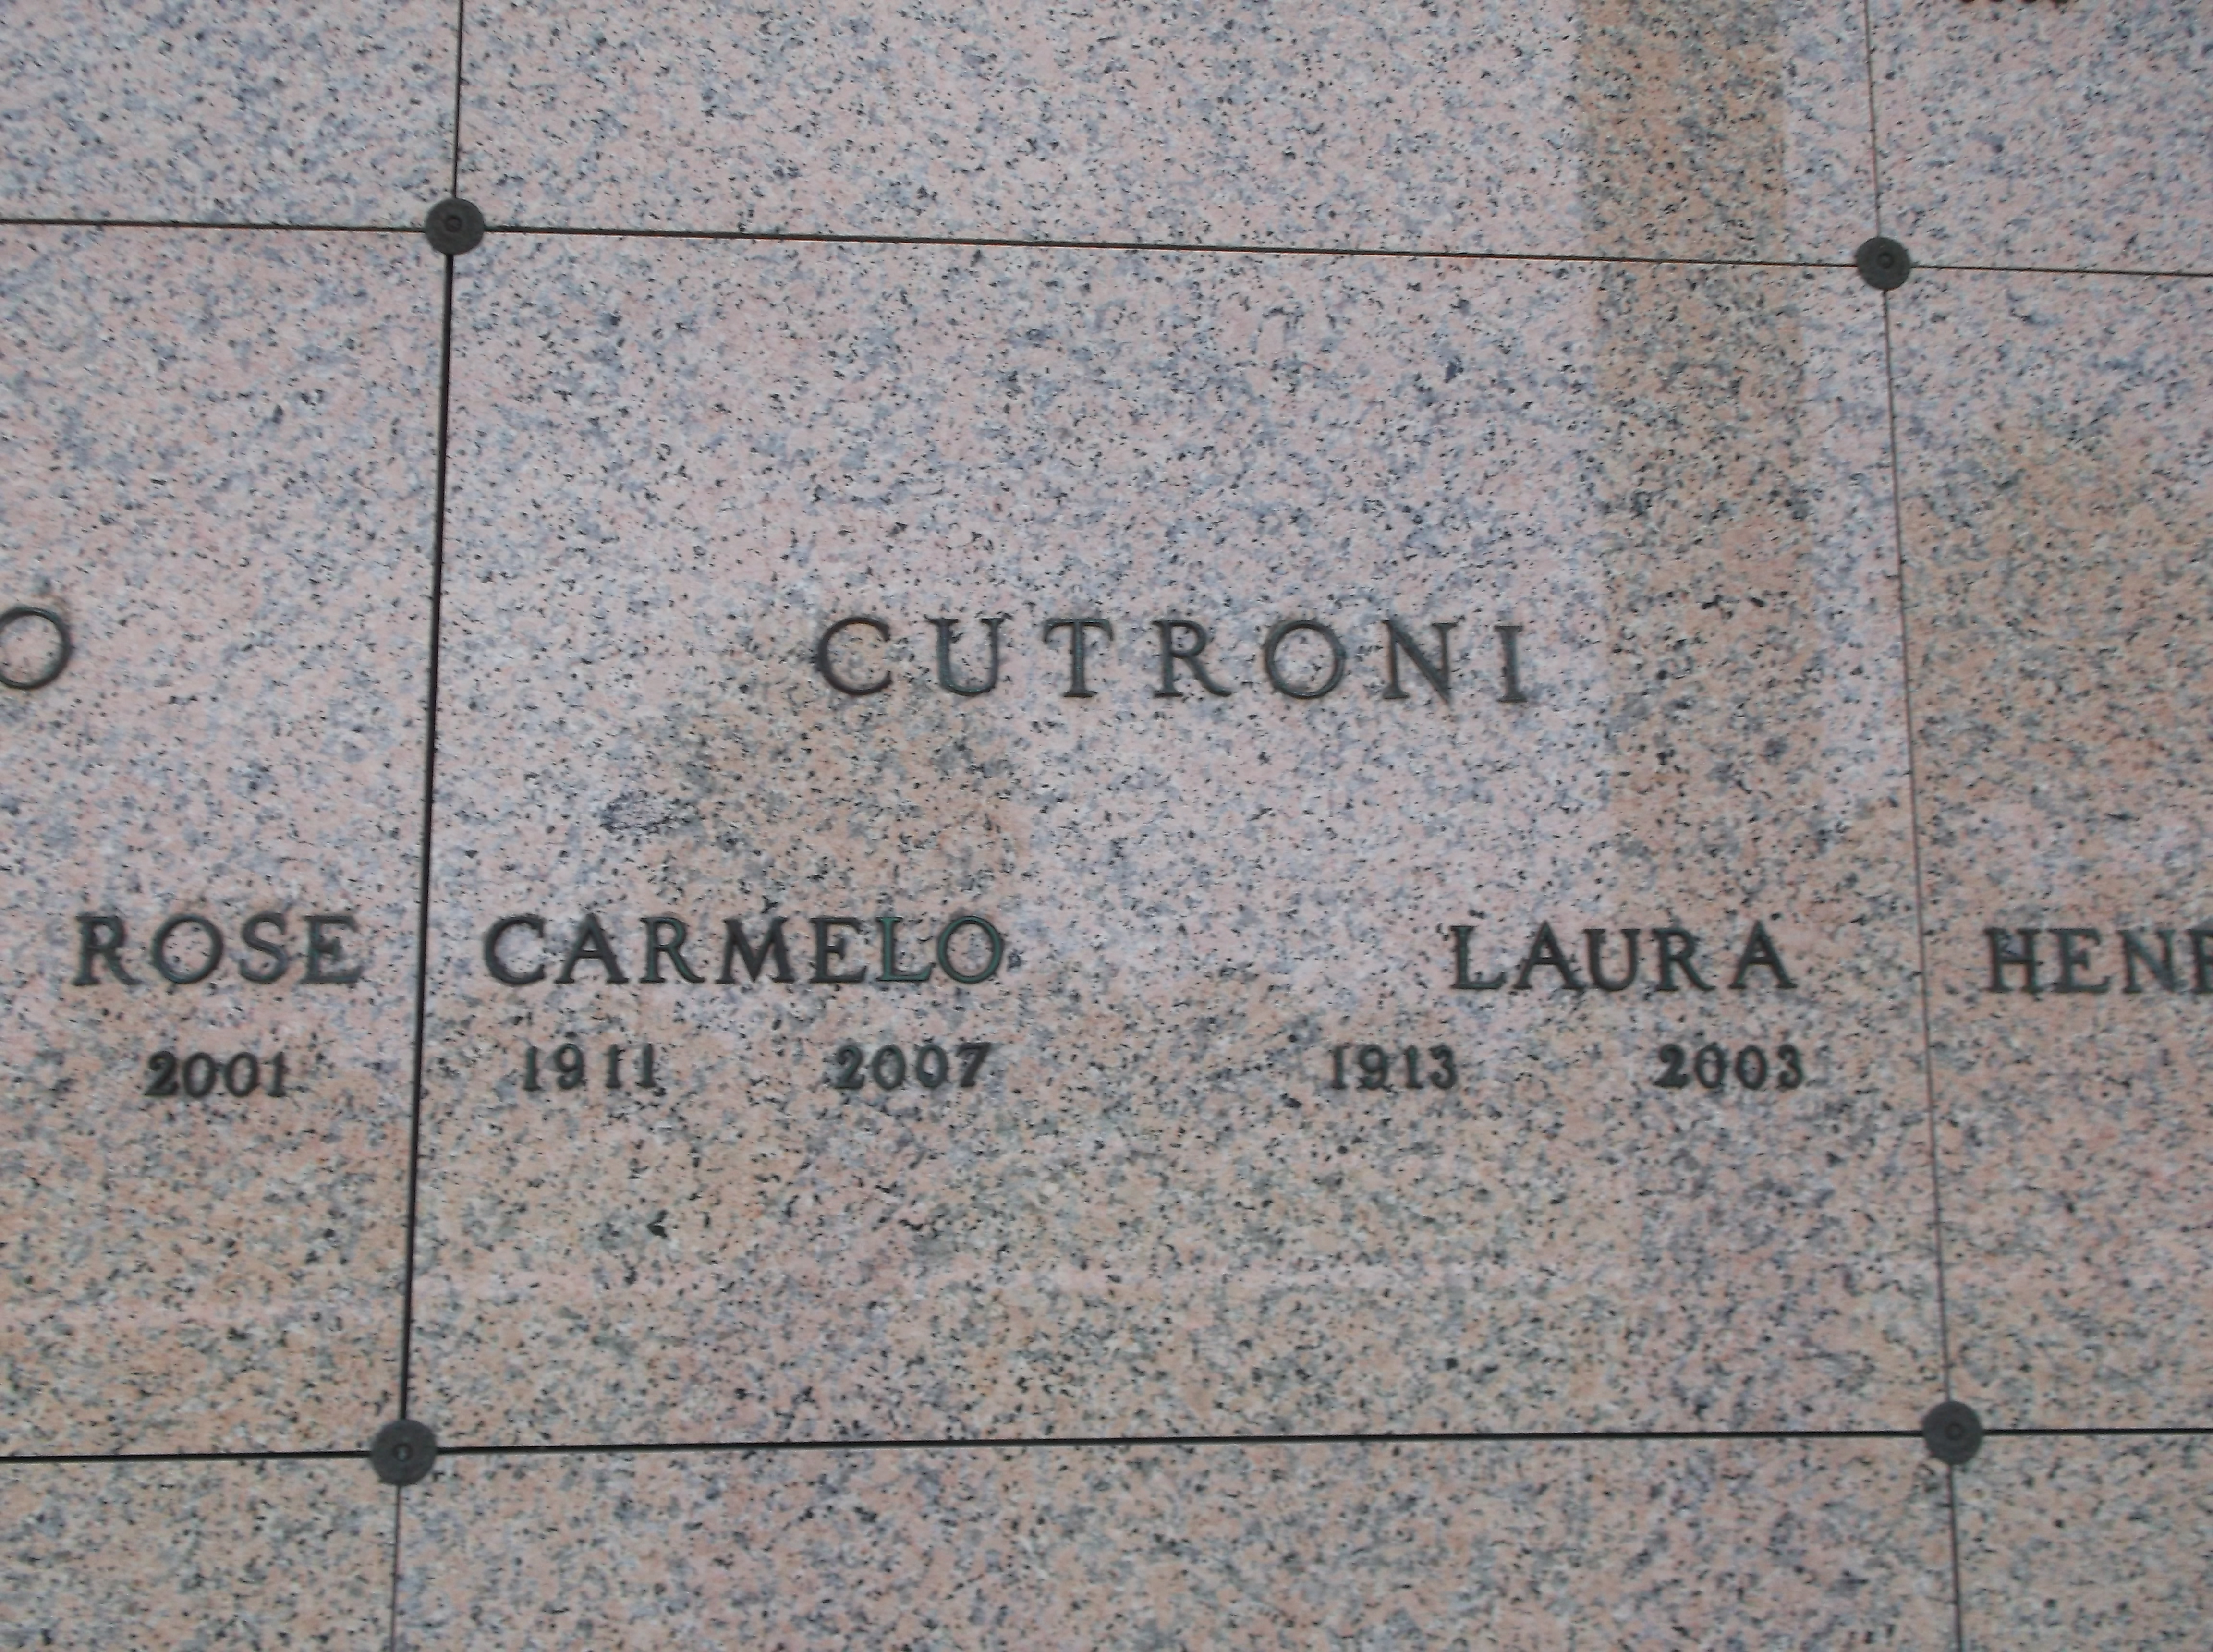 Laura Cutroni